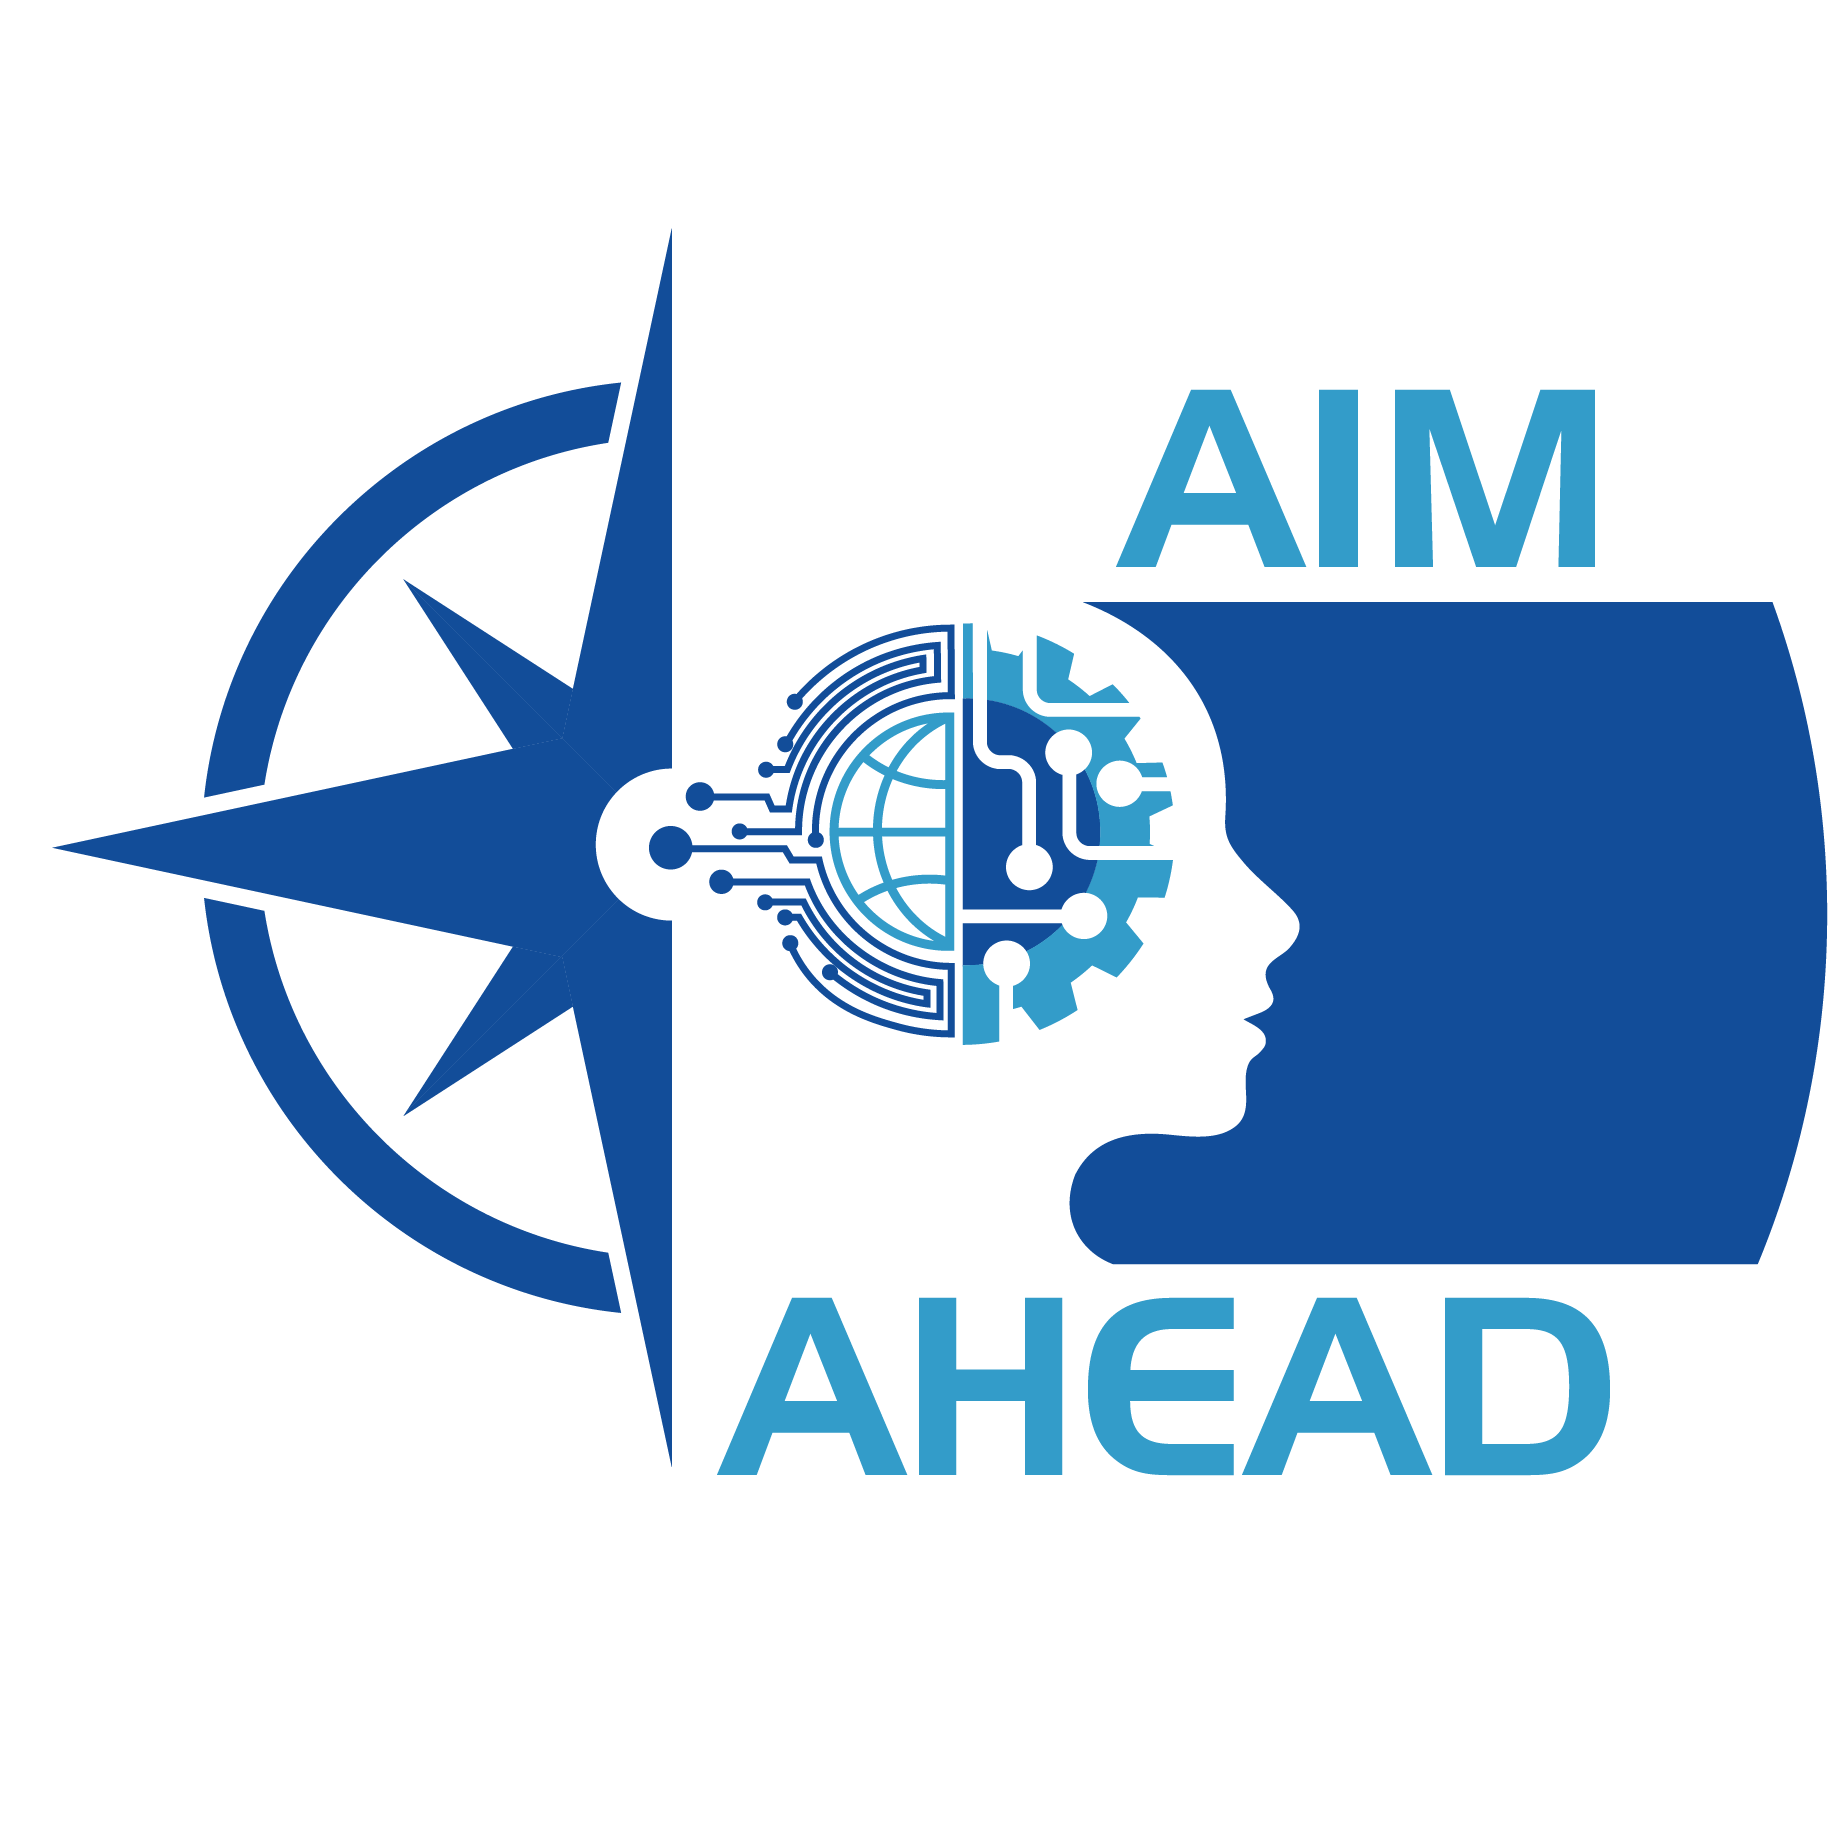 AIM-AHEAD graphic identity